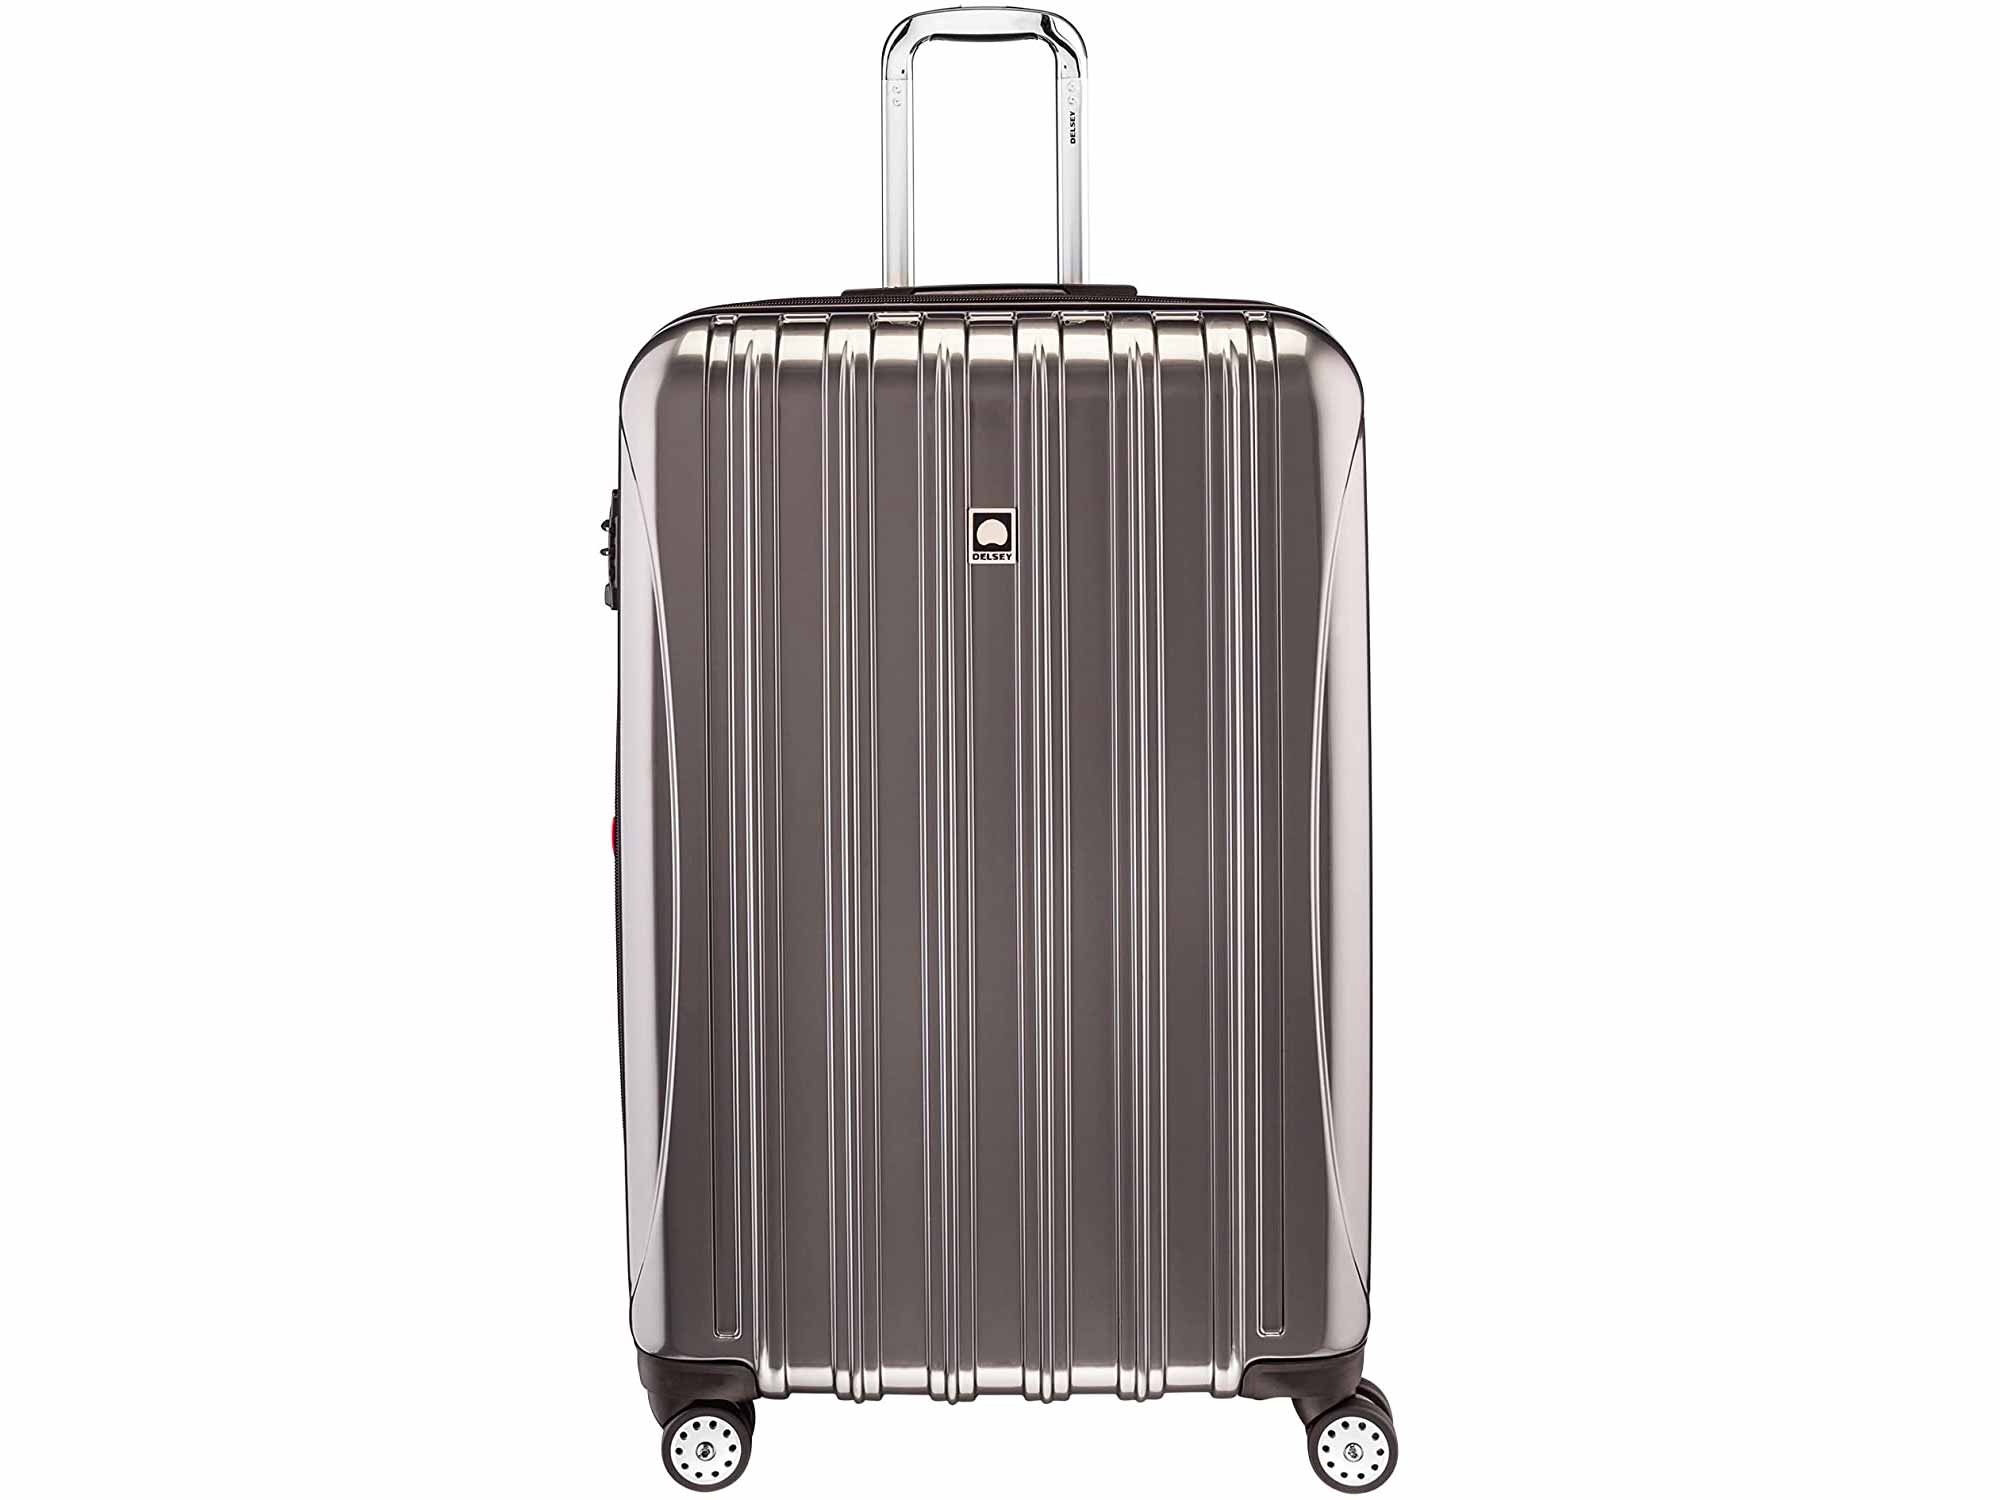 DELSEY Paris Helium Aero Hardside Expandable Luggage with Spinner Wheels, Titanium, Checked-Large 29 Inch